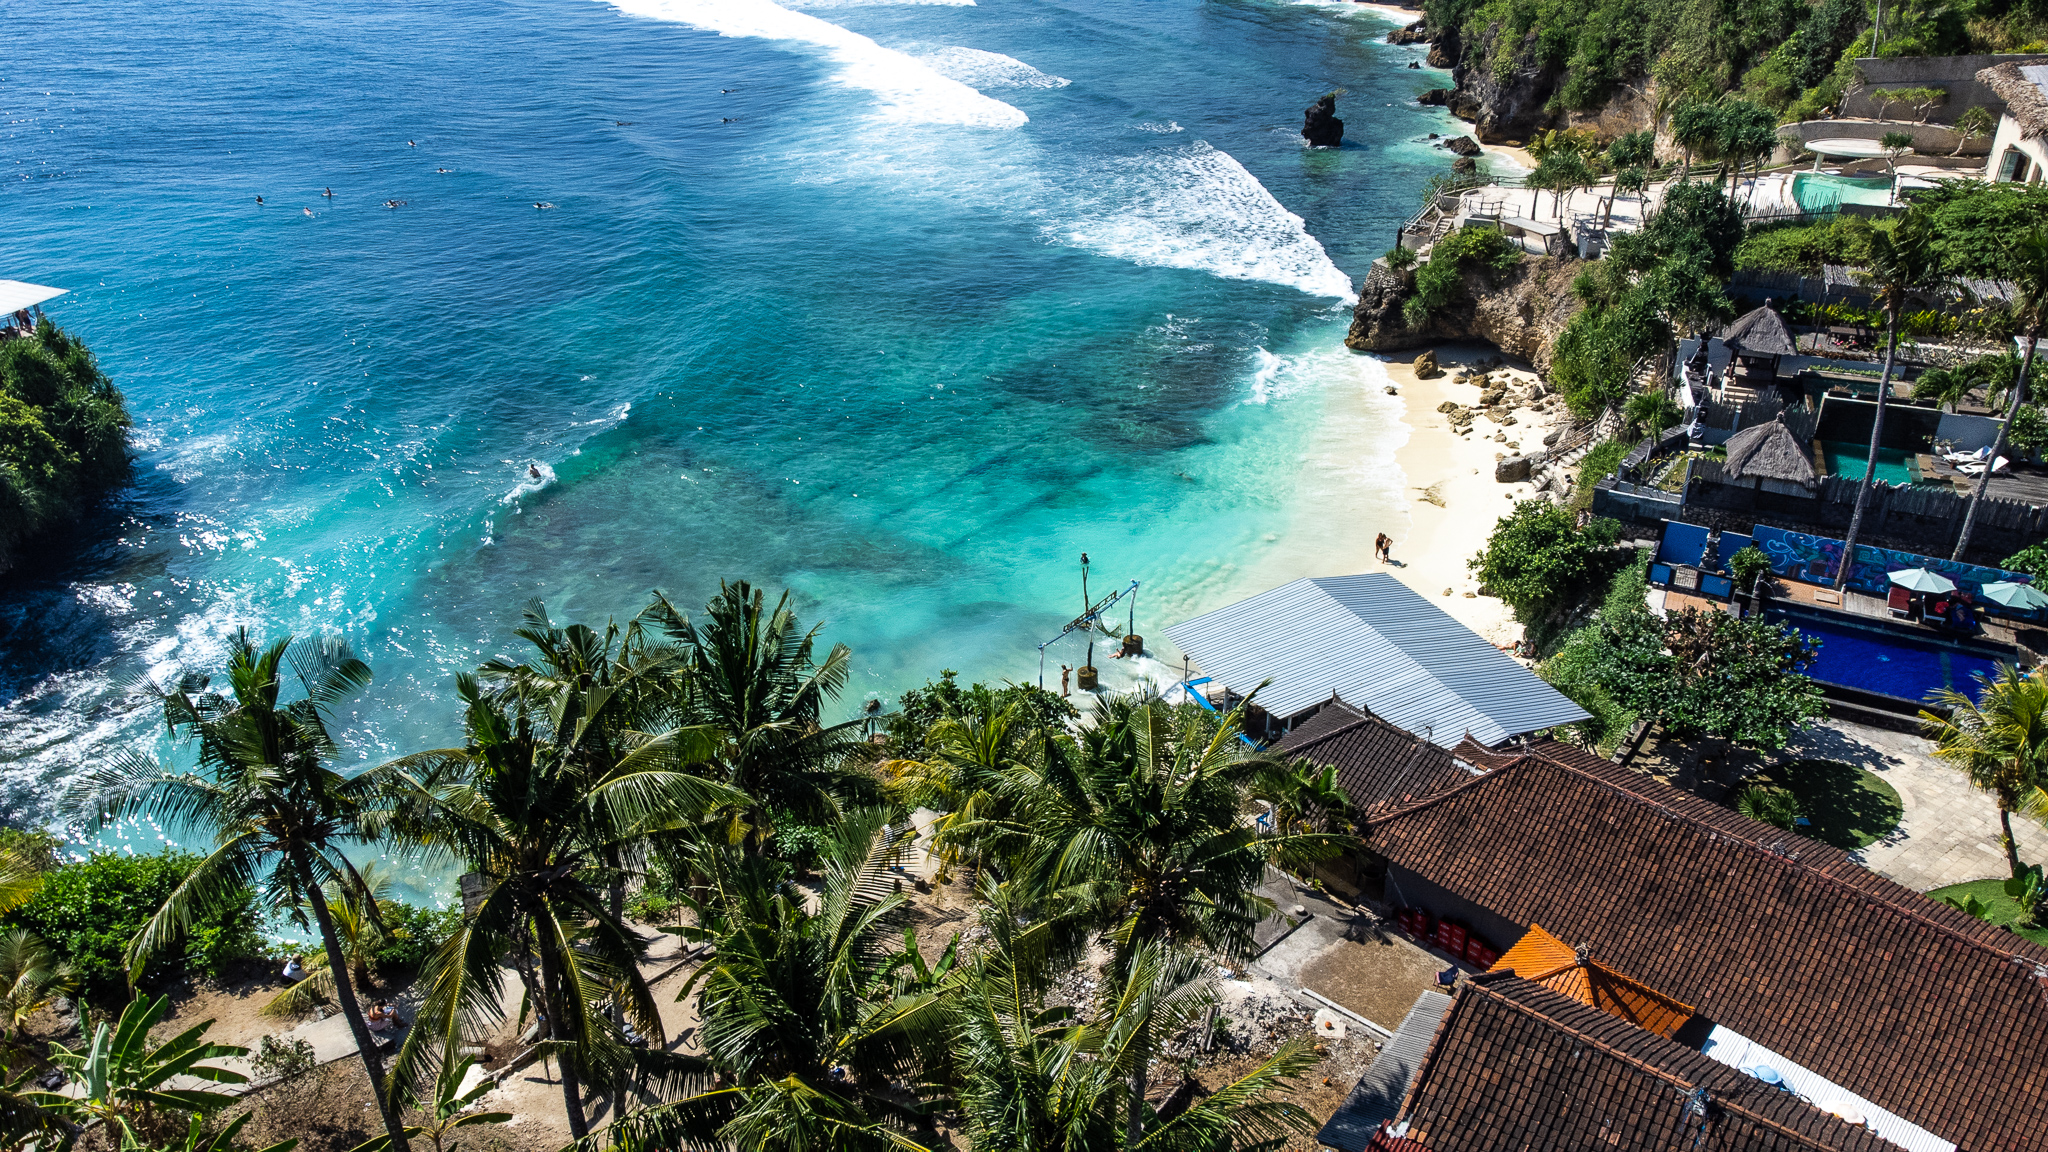 nusa ceningan bali island indonesia hidden secret point beach day trip